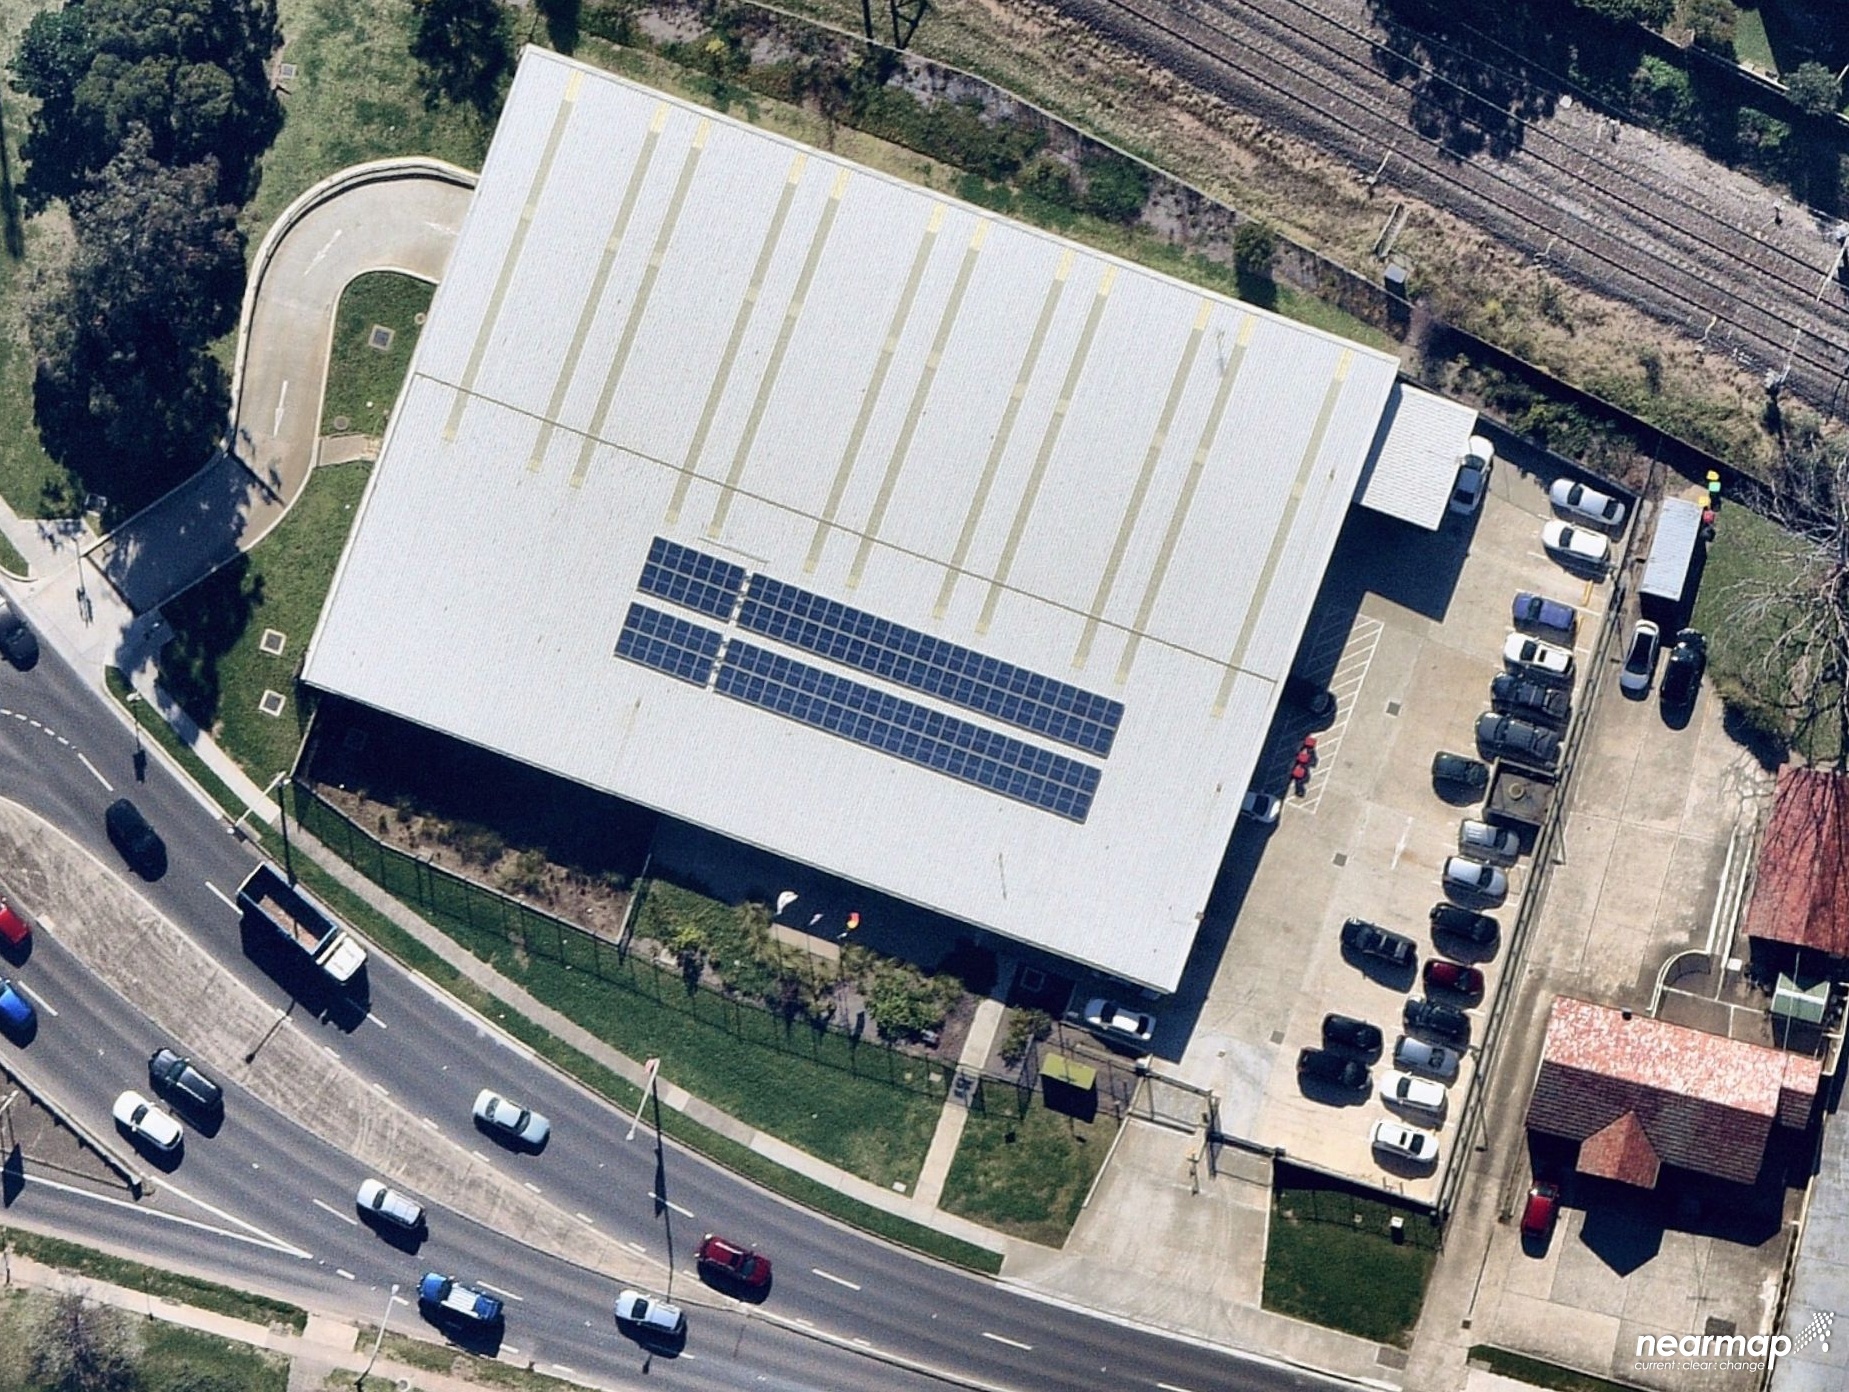 Commercial Solar Companies in Sydney